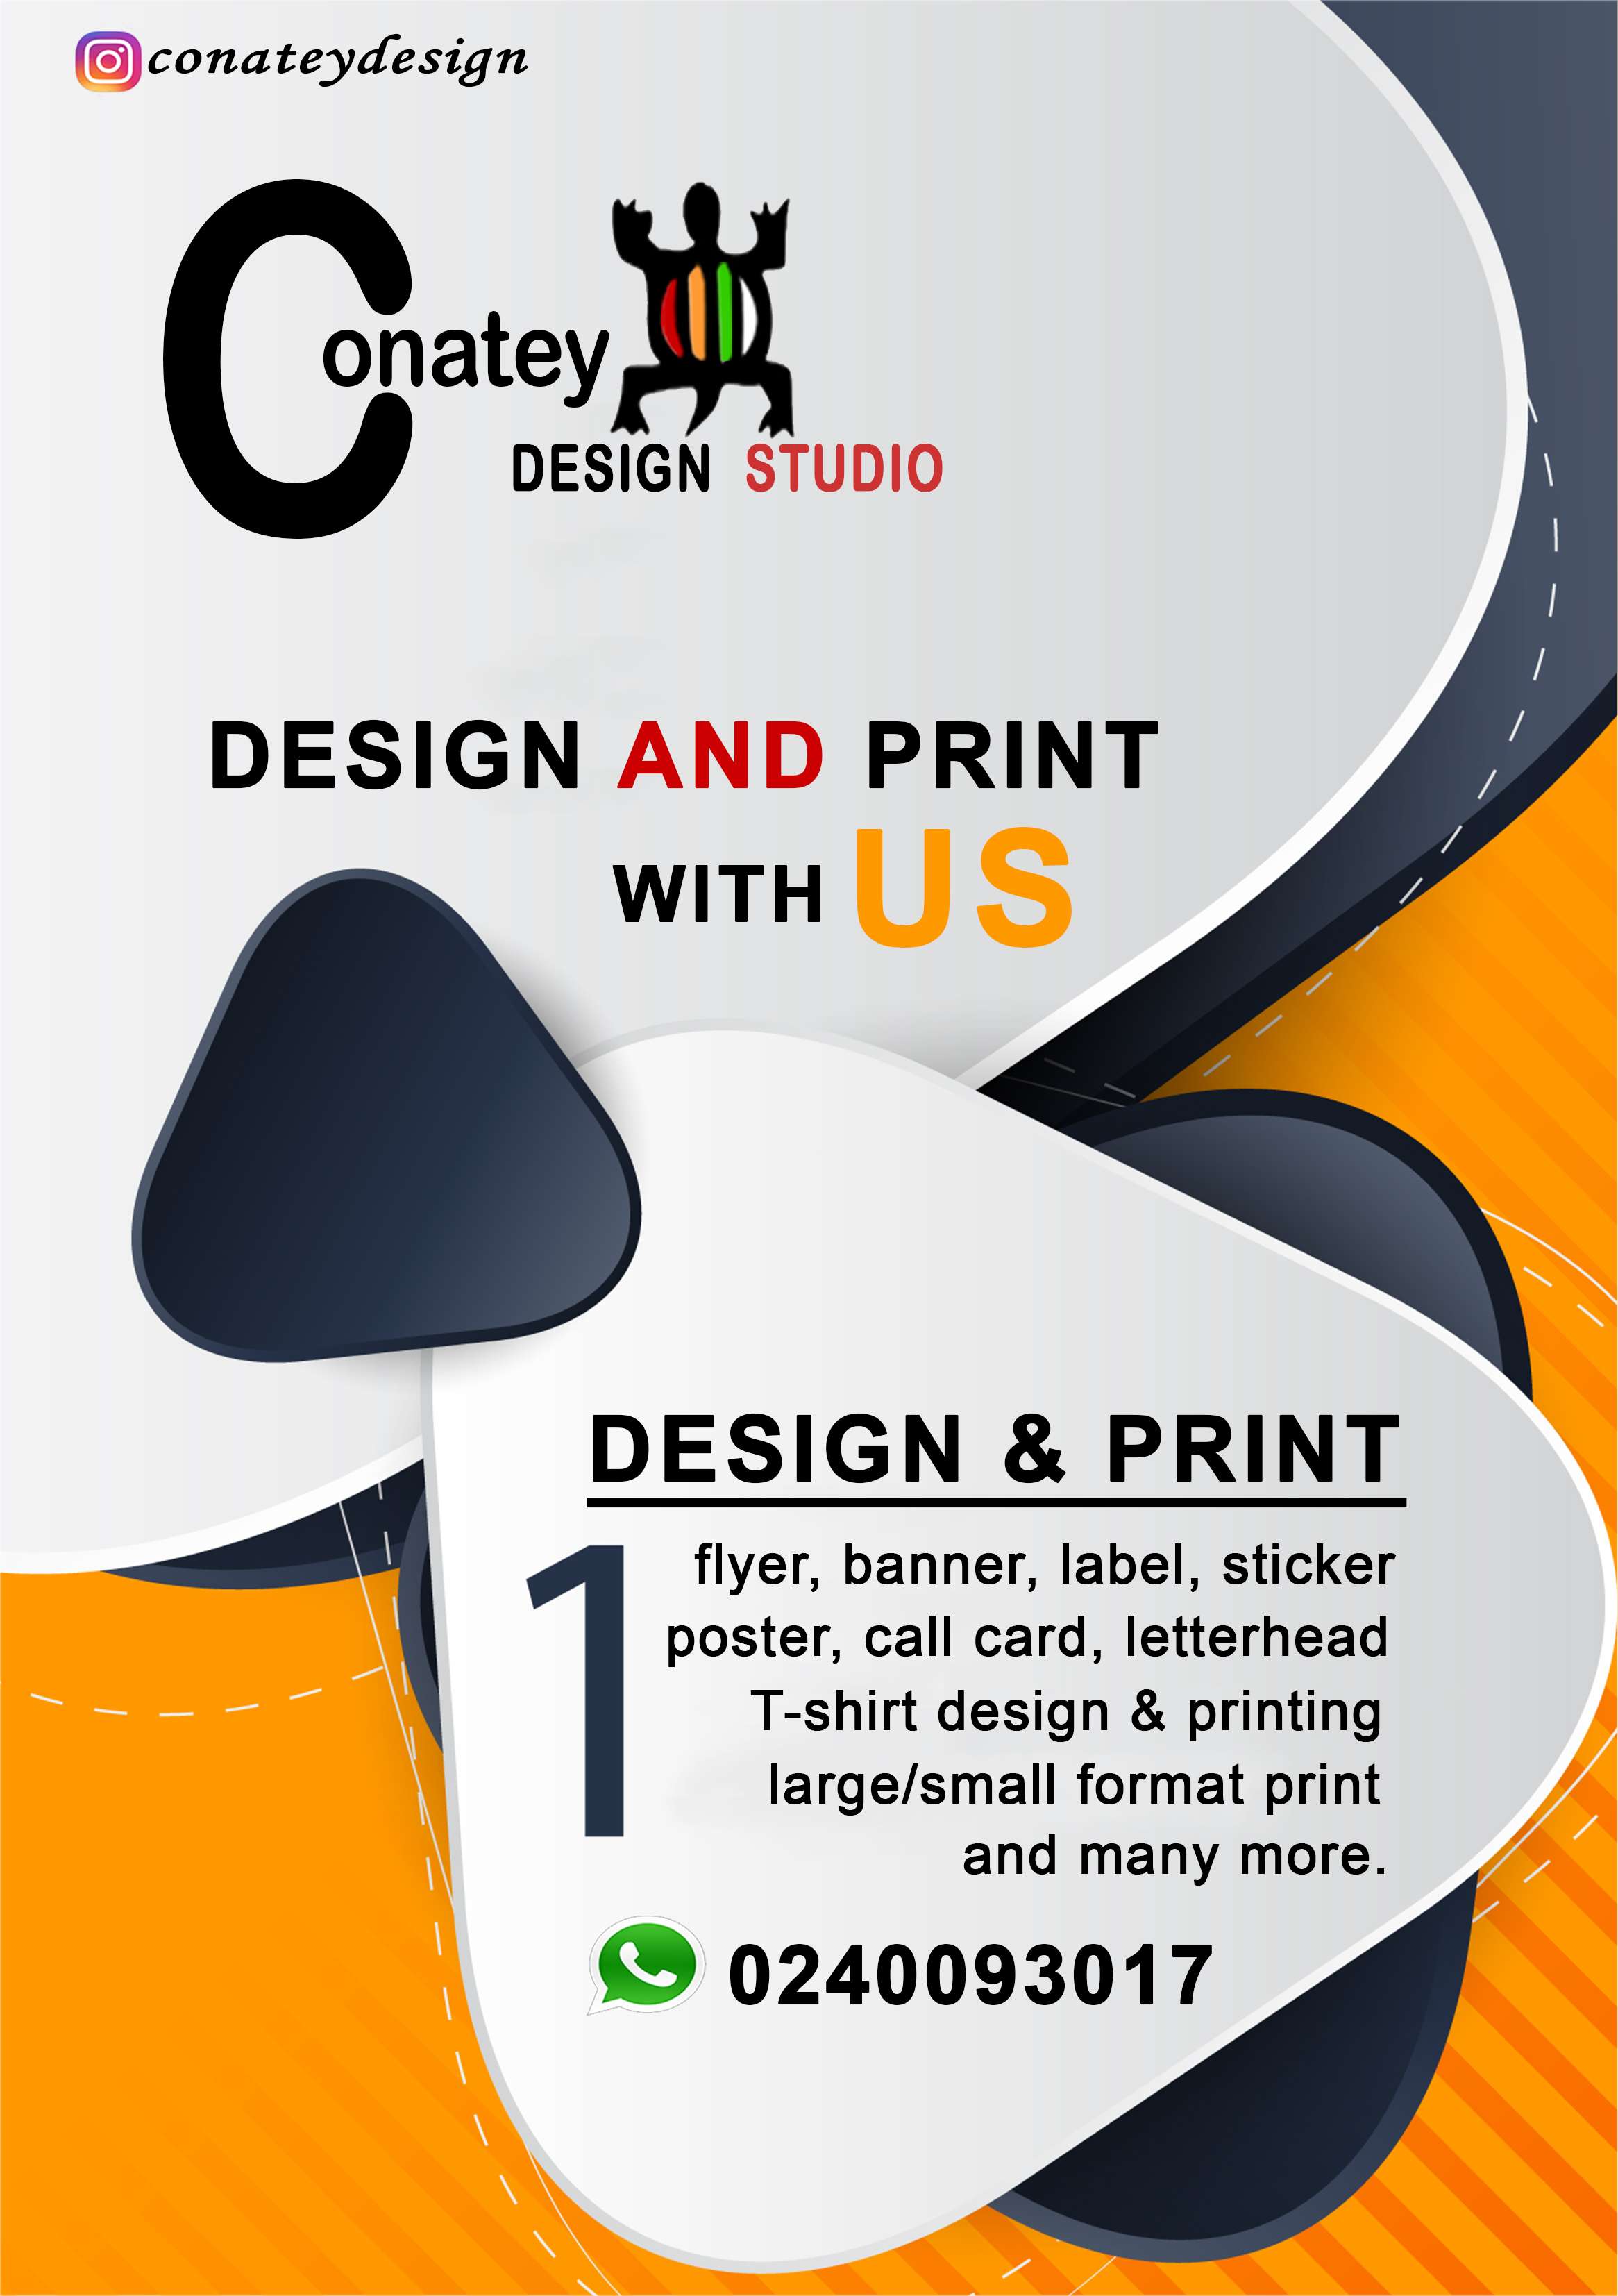 Design and print